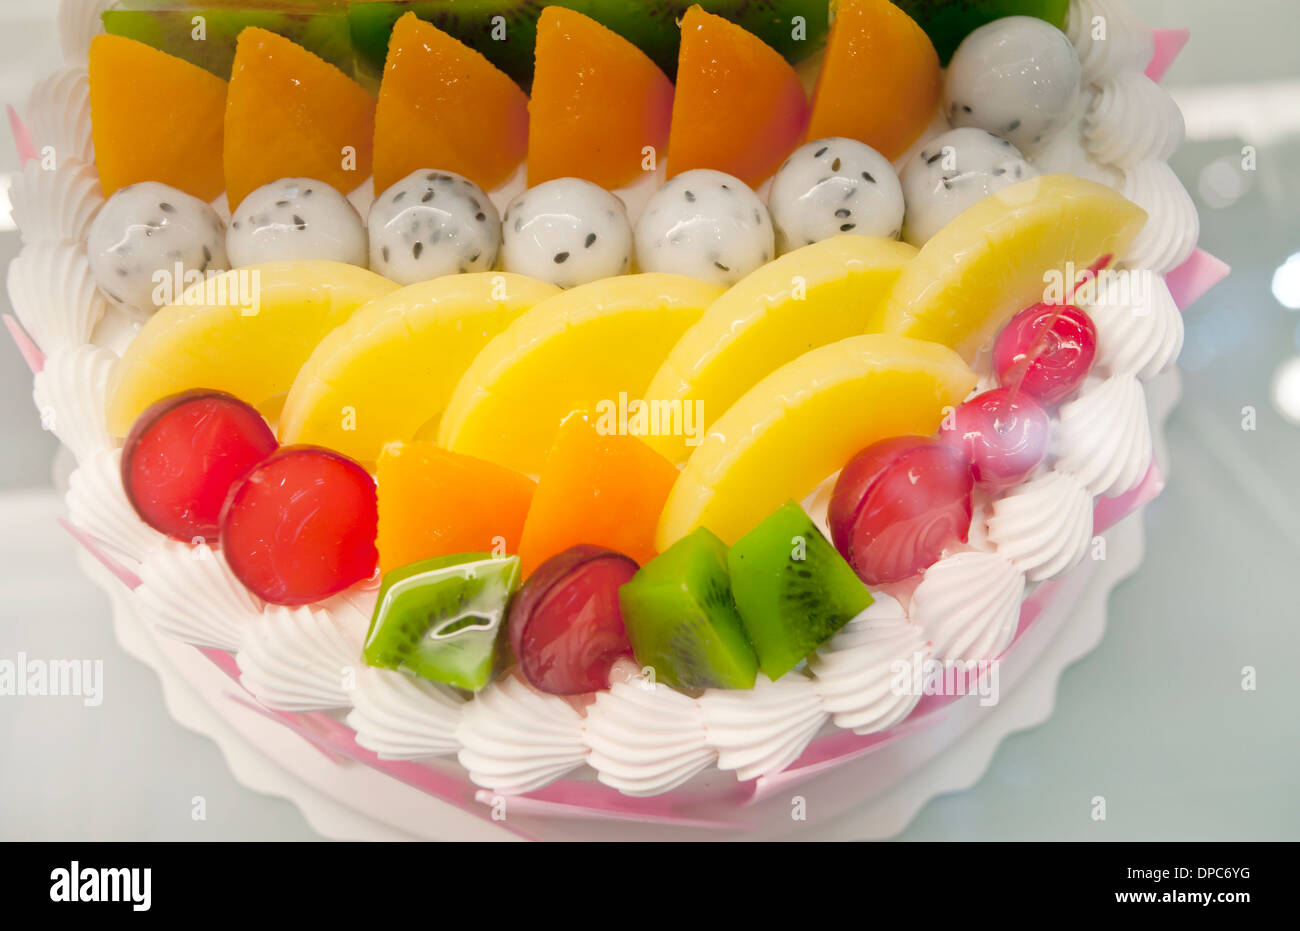 Birthday cakes, pastries design Stock Photo